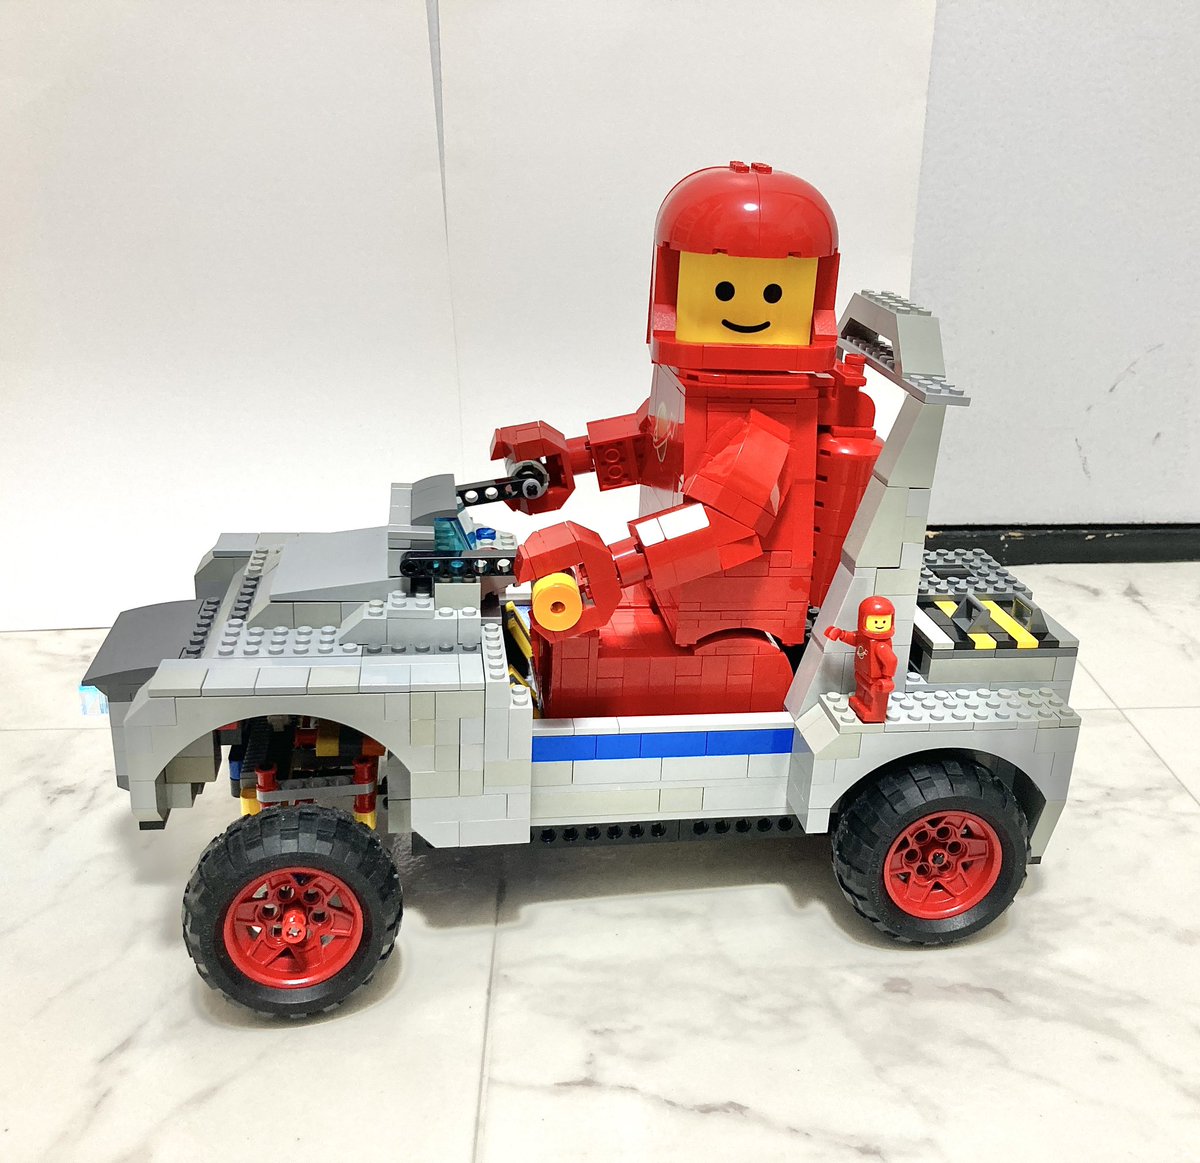 Spaceman got Rover vehicle.

#LEGO  #spaceman